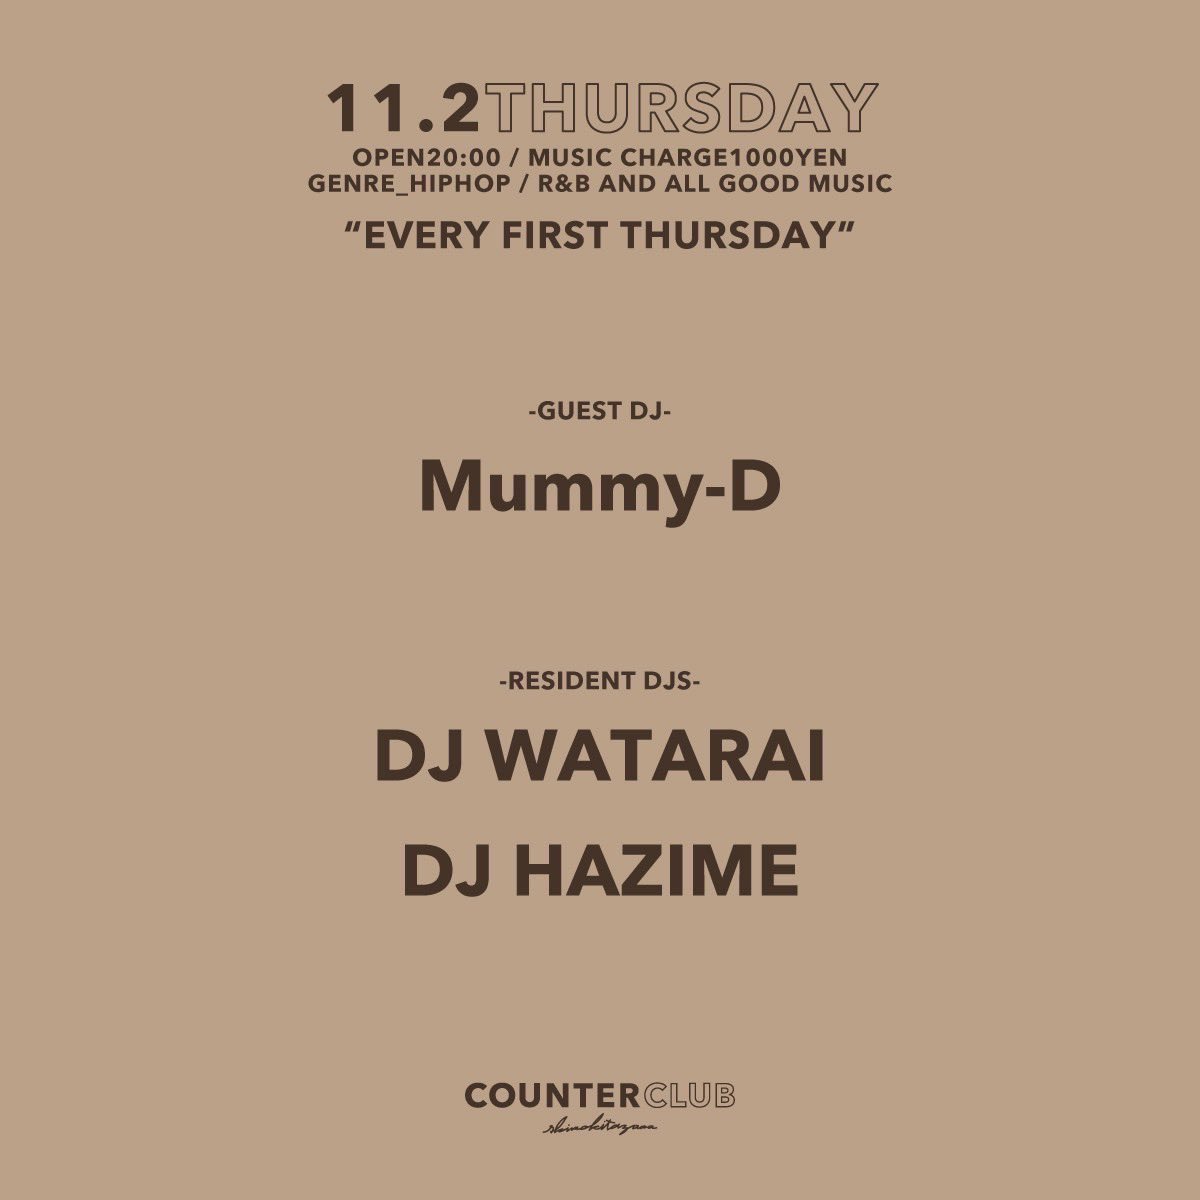 【Mummy-D出演】

2023.11.2.thu
@counter_club 

-Resident DJ-
@djhazime @djwatarai 

-Guest DJ-
Mummy-D

Open 20:00